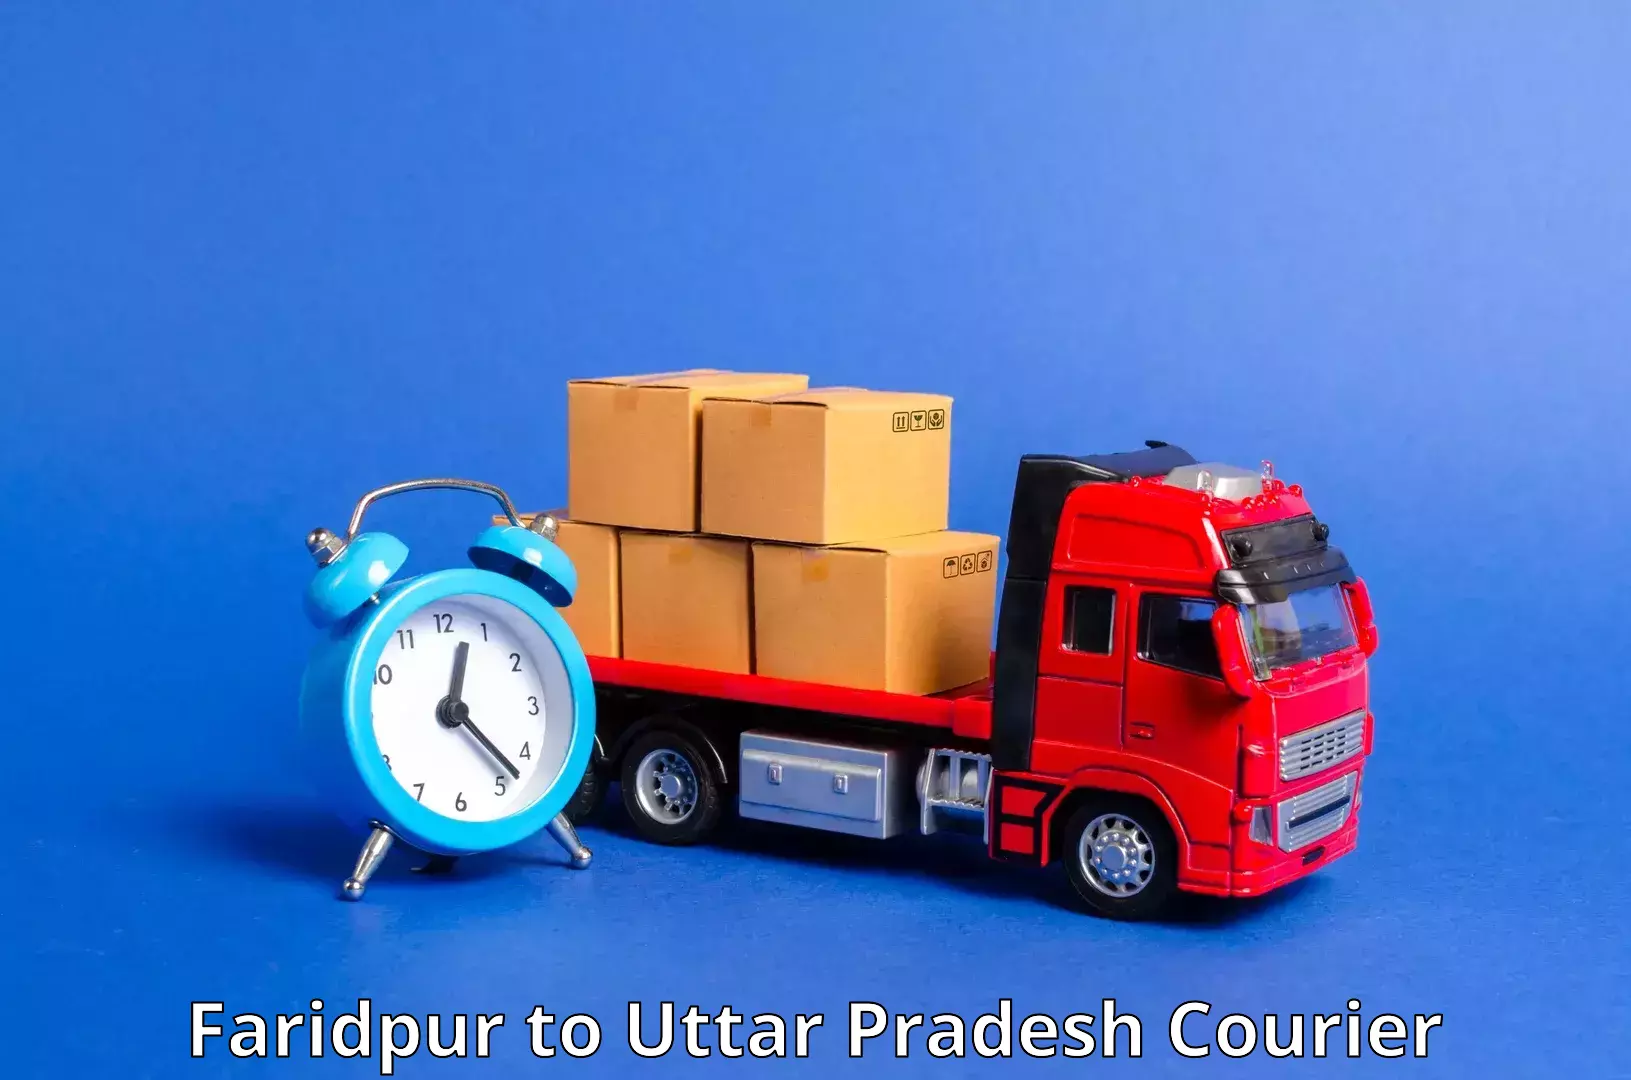 Advanced courier platforms Faridpur to Noida